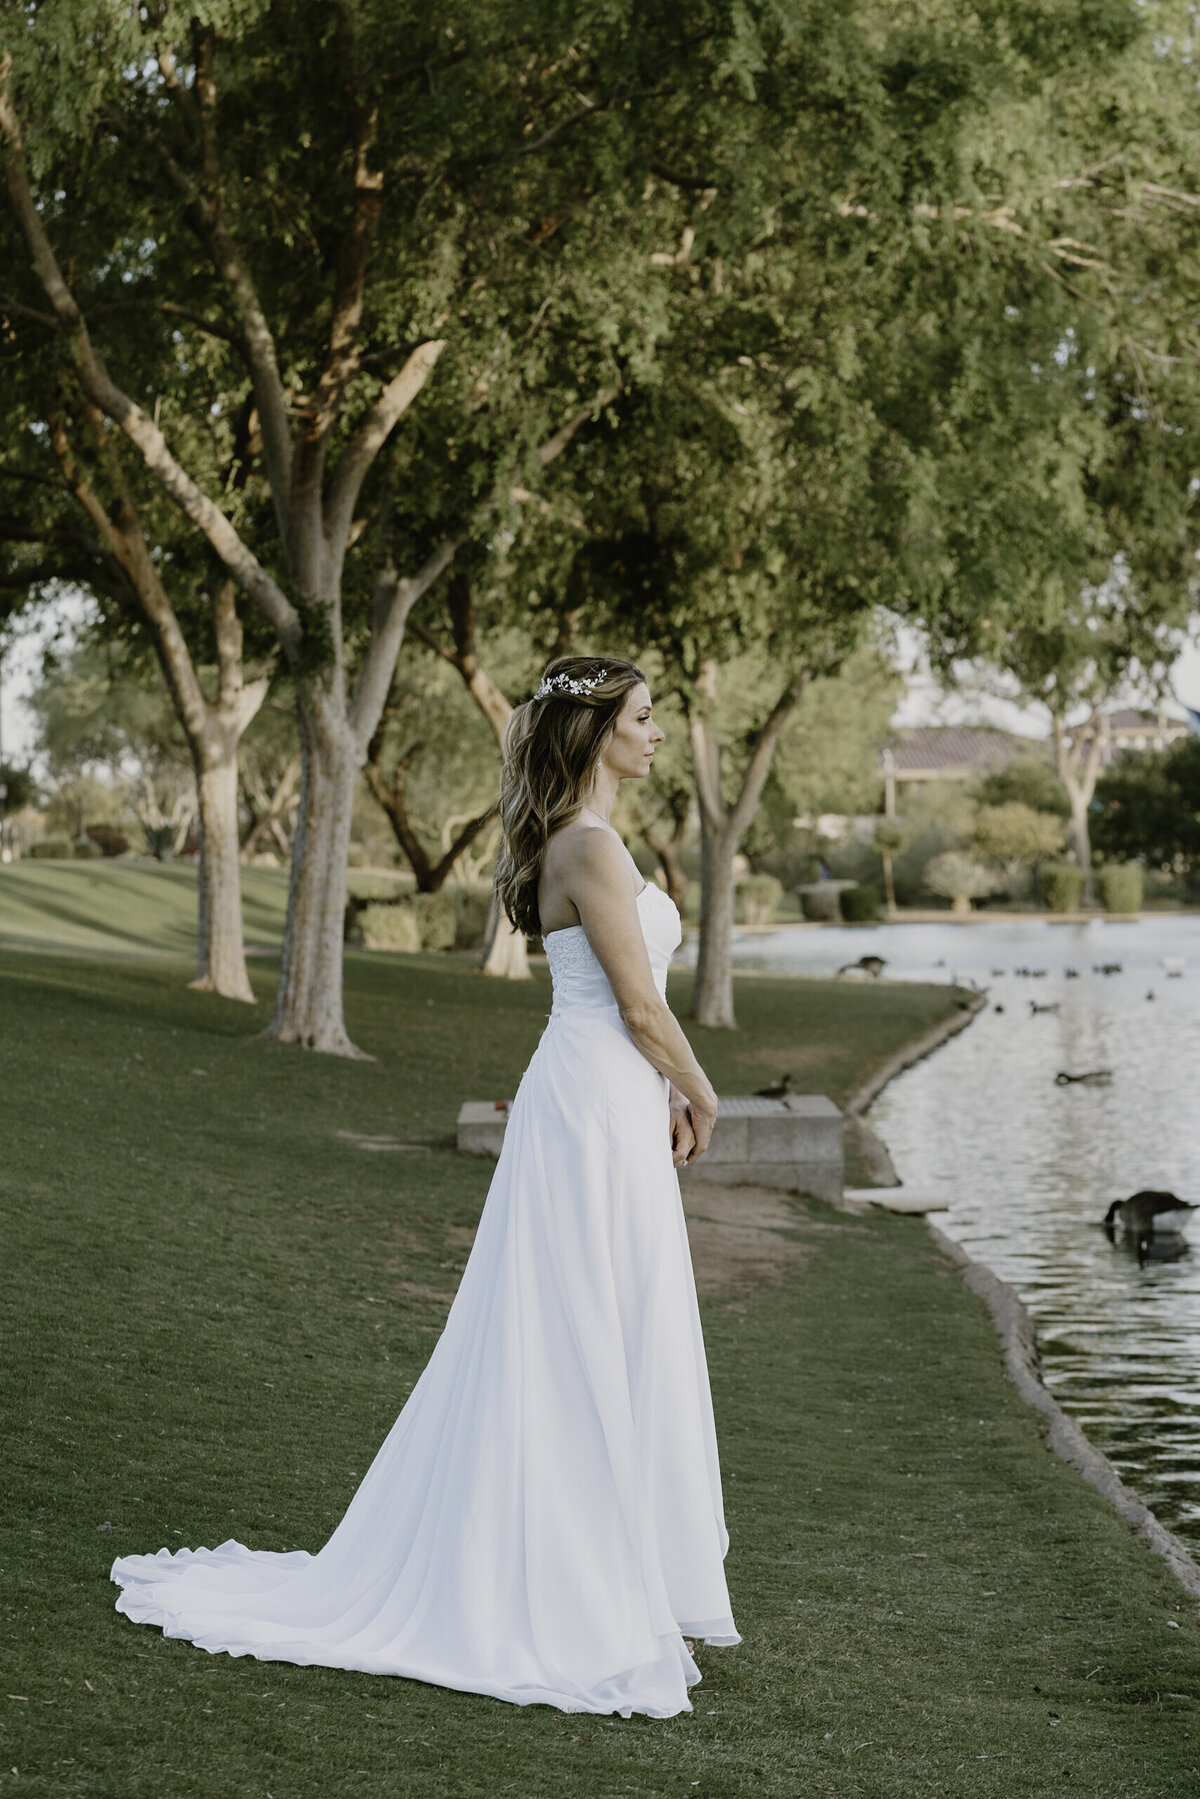 Backyard Wedding Photography: Love Blooms at Home